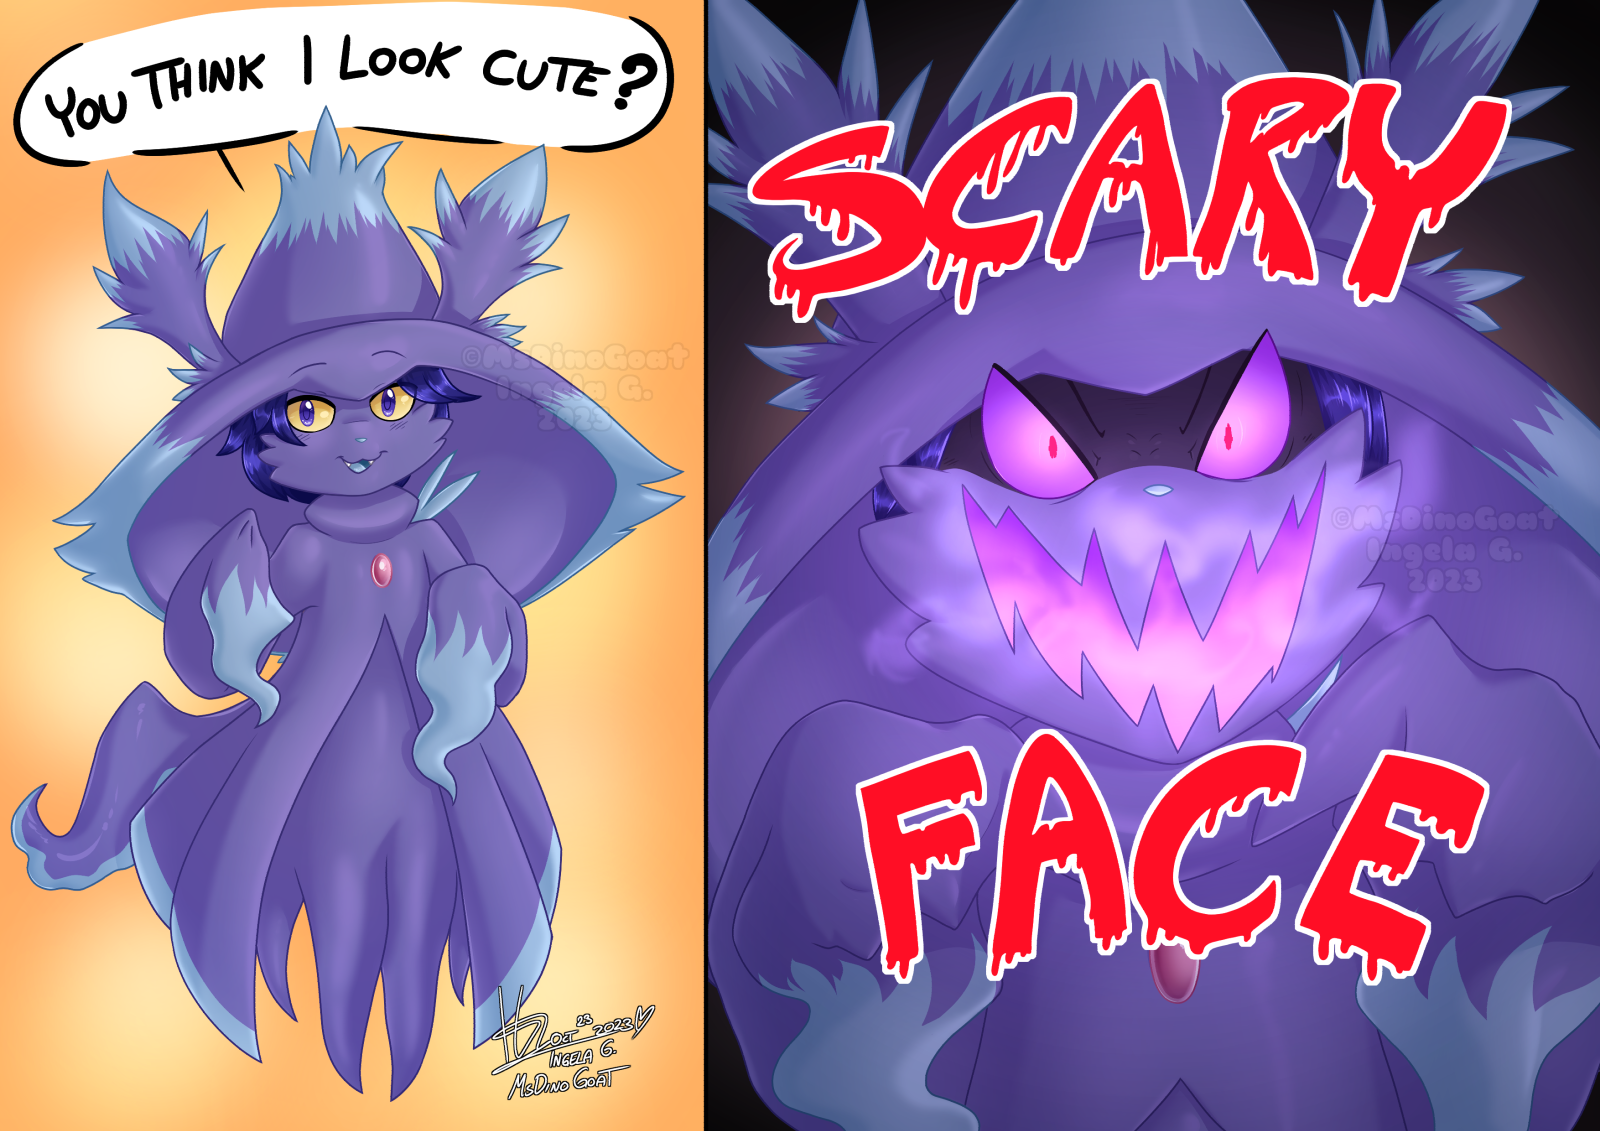 Nicks Scary Face by MsDinoGoat on DeviantArt